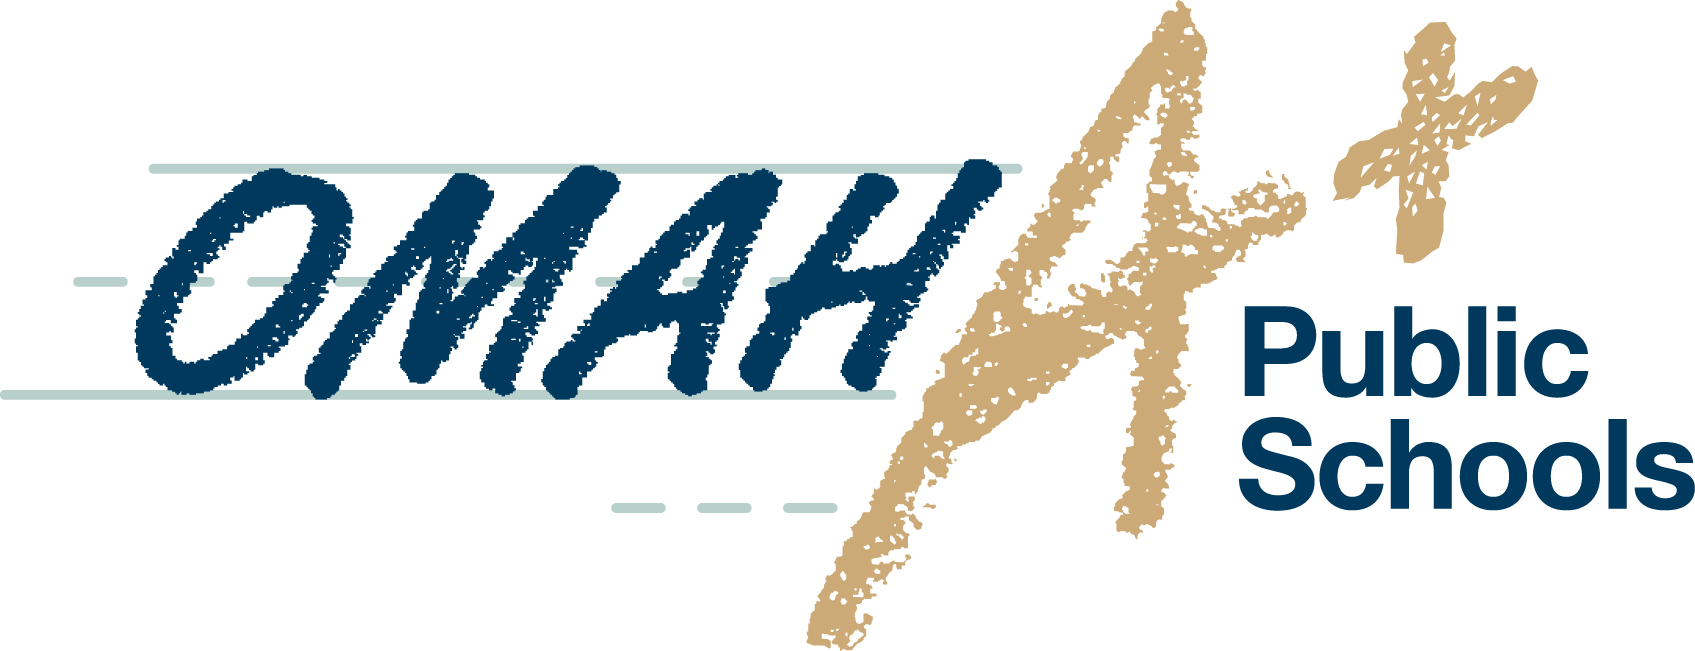 Omaha Public Schools logo